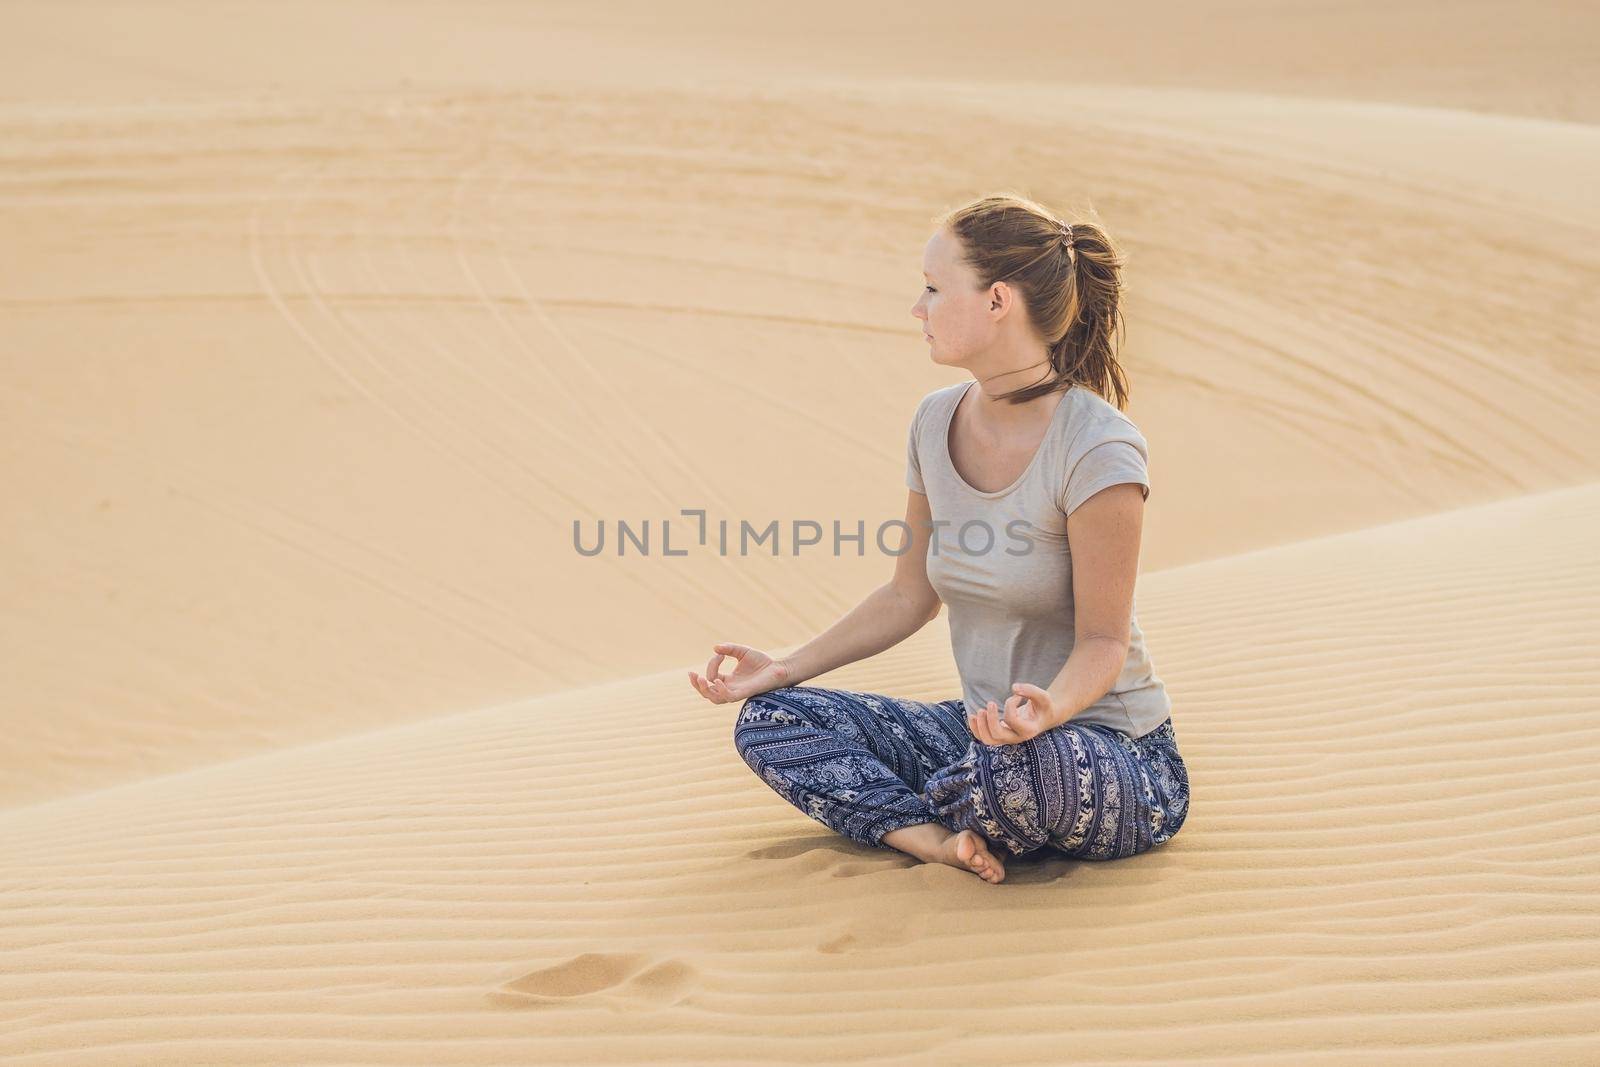 Young woman meditating in the desert by galitskaya